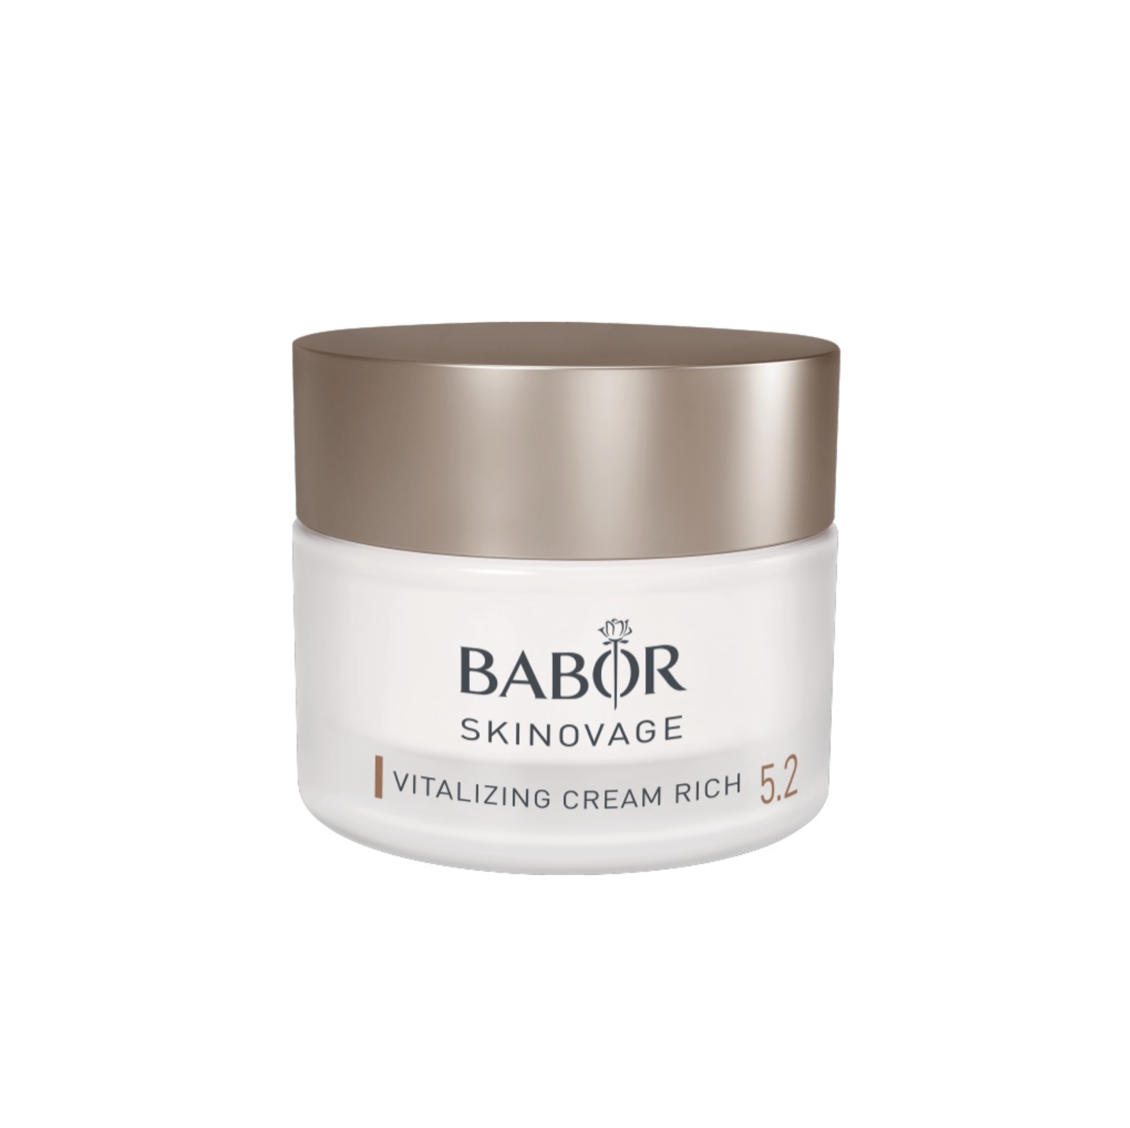 Babor Skinovage, Vitalizing Cream Rich